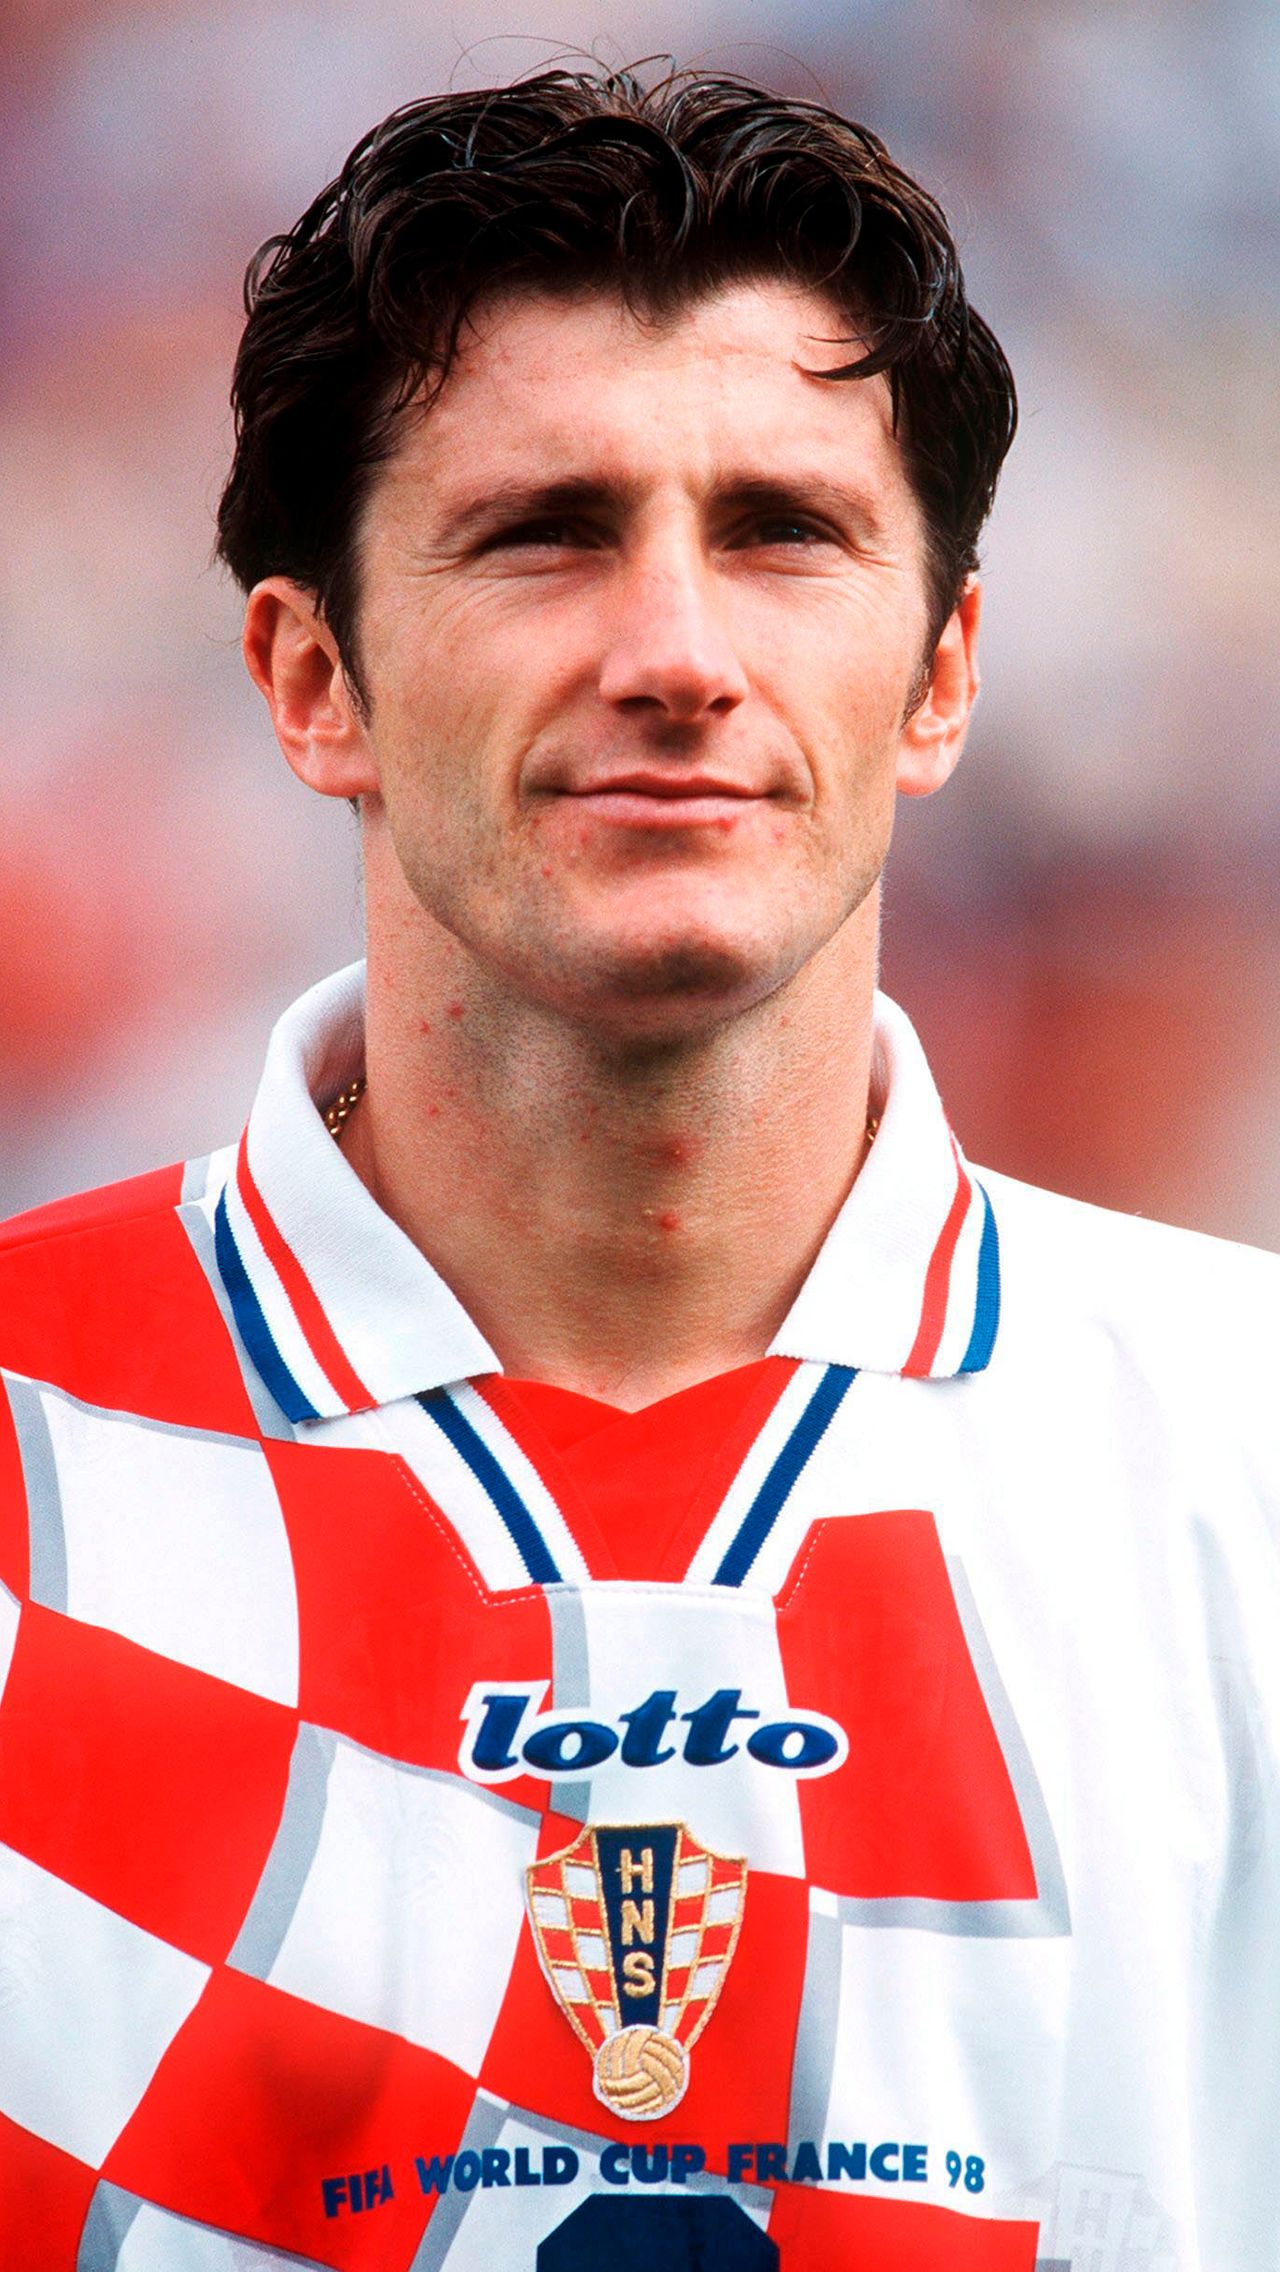 Давор Шукер (1998), сборная Хорватии — 6 голов